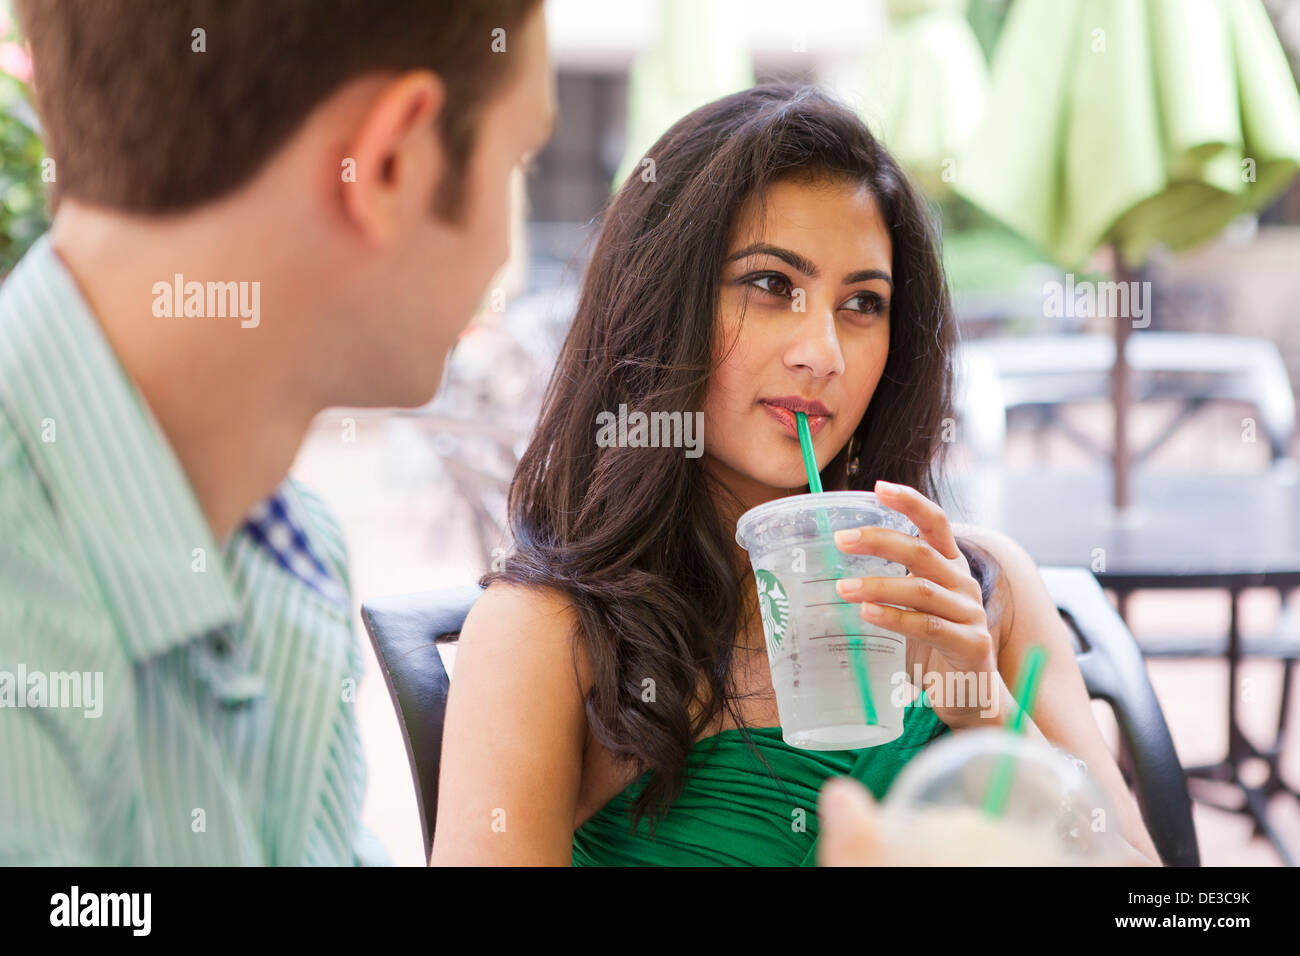 Young woman ignoring man's leer Stock Photo